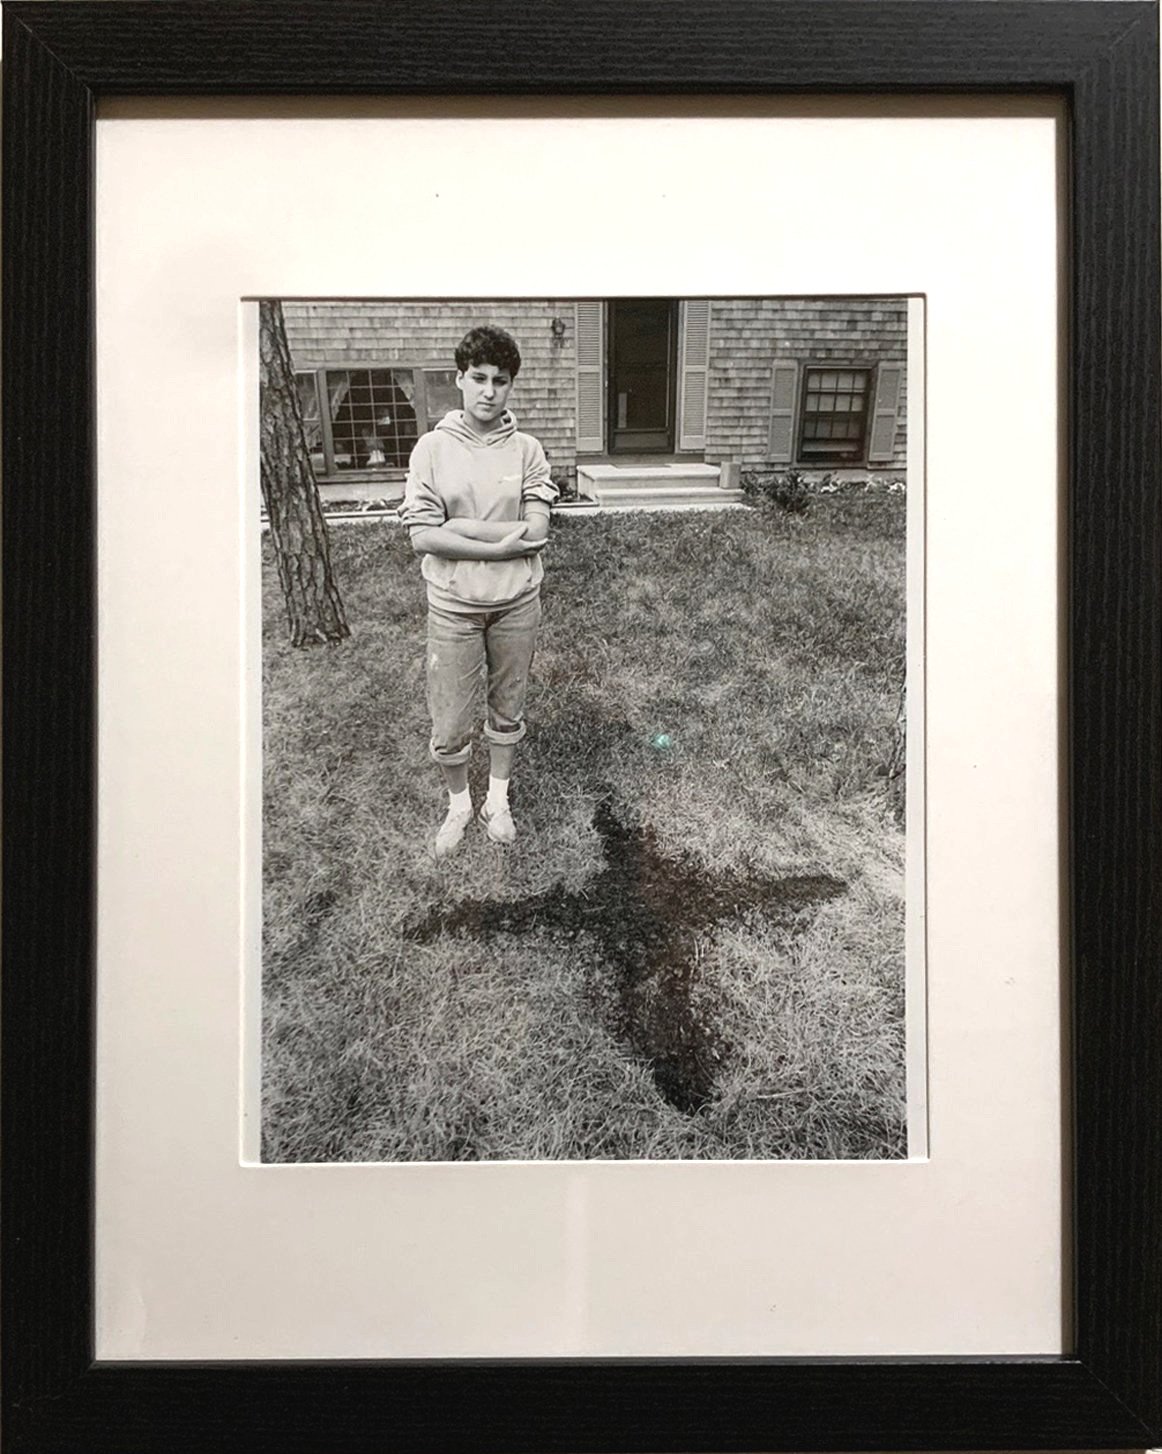 12. 7/9/? – Lisa Diaz, cross burning imprint happened around 1:30 am. Frank Paparo, photographer. North Harwich, Massachusetts